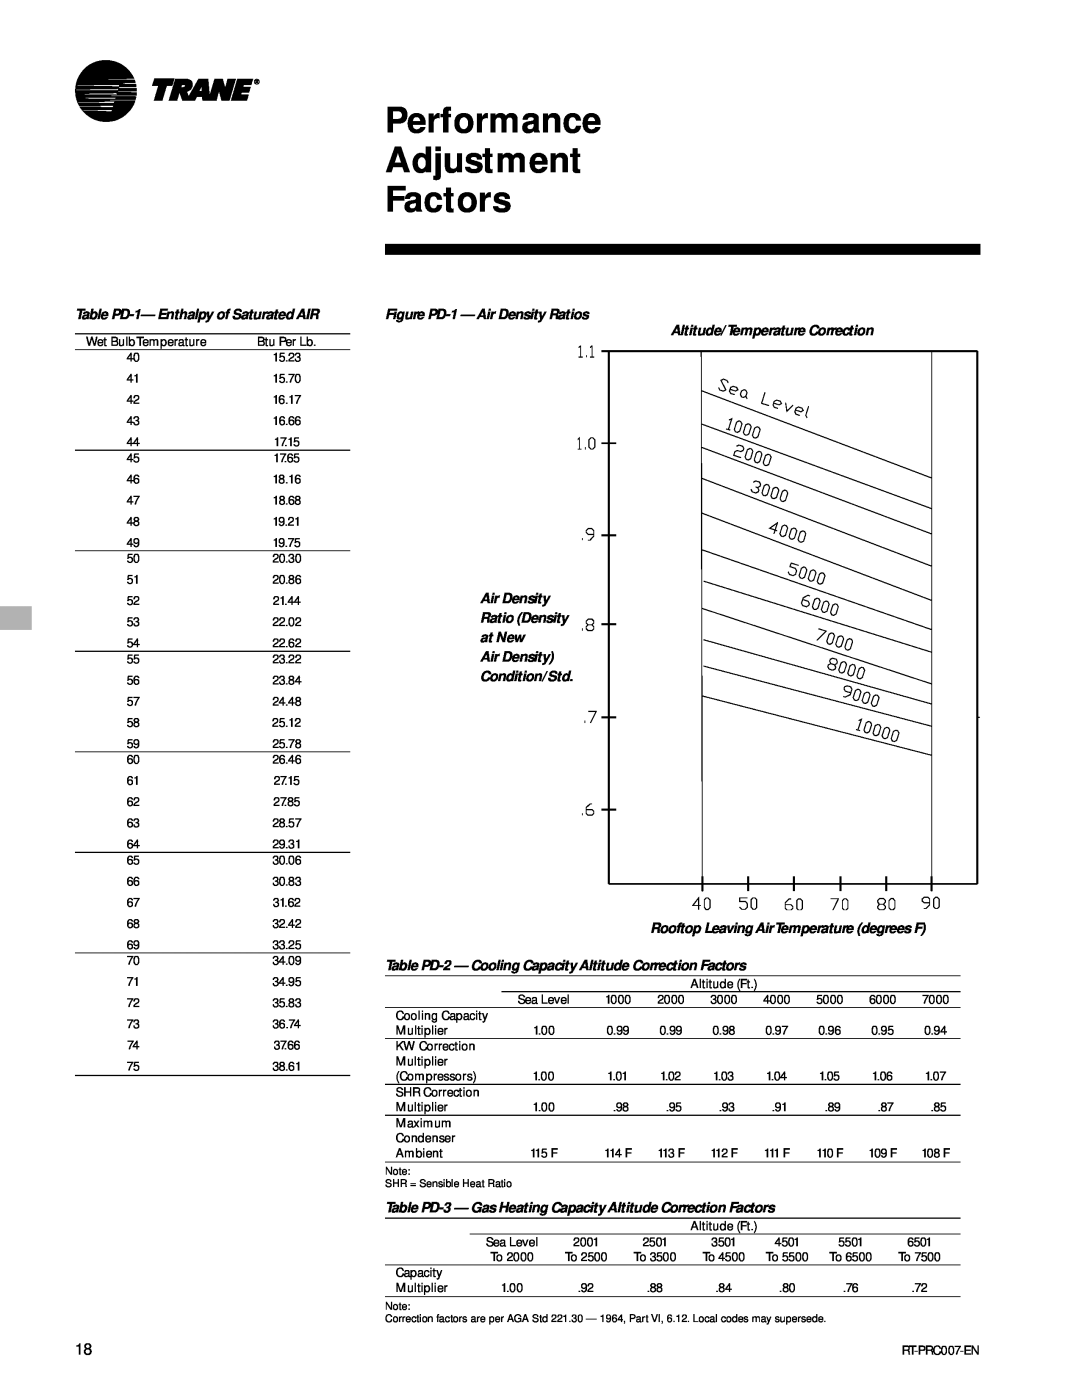 Trane RT-PRC007-EN Performance Adjustment Factors, Table PD-1-Enthalpy of Saturated AIR, Figure PD-1- Air Density Ratios 